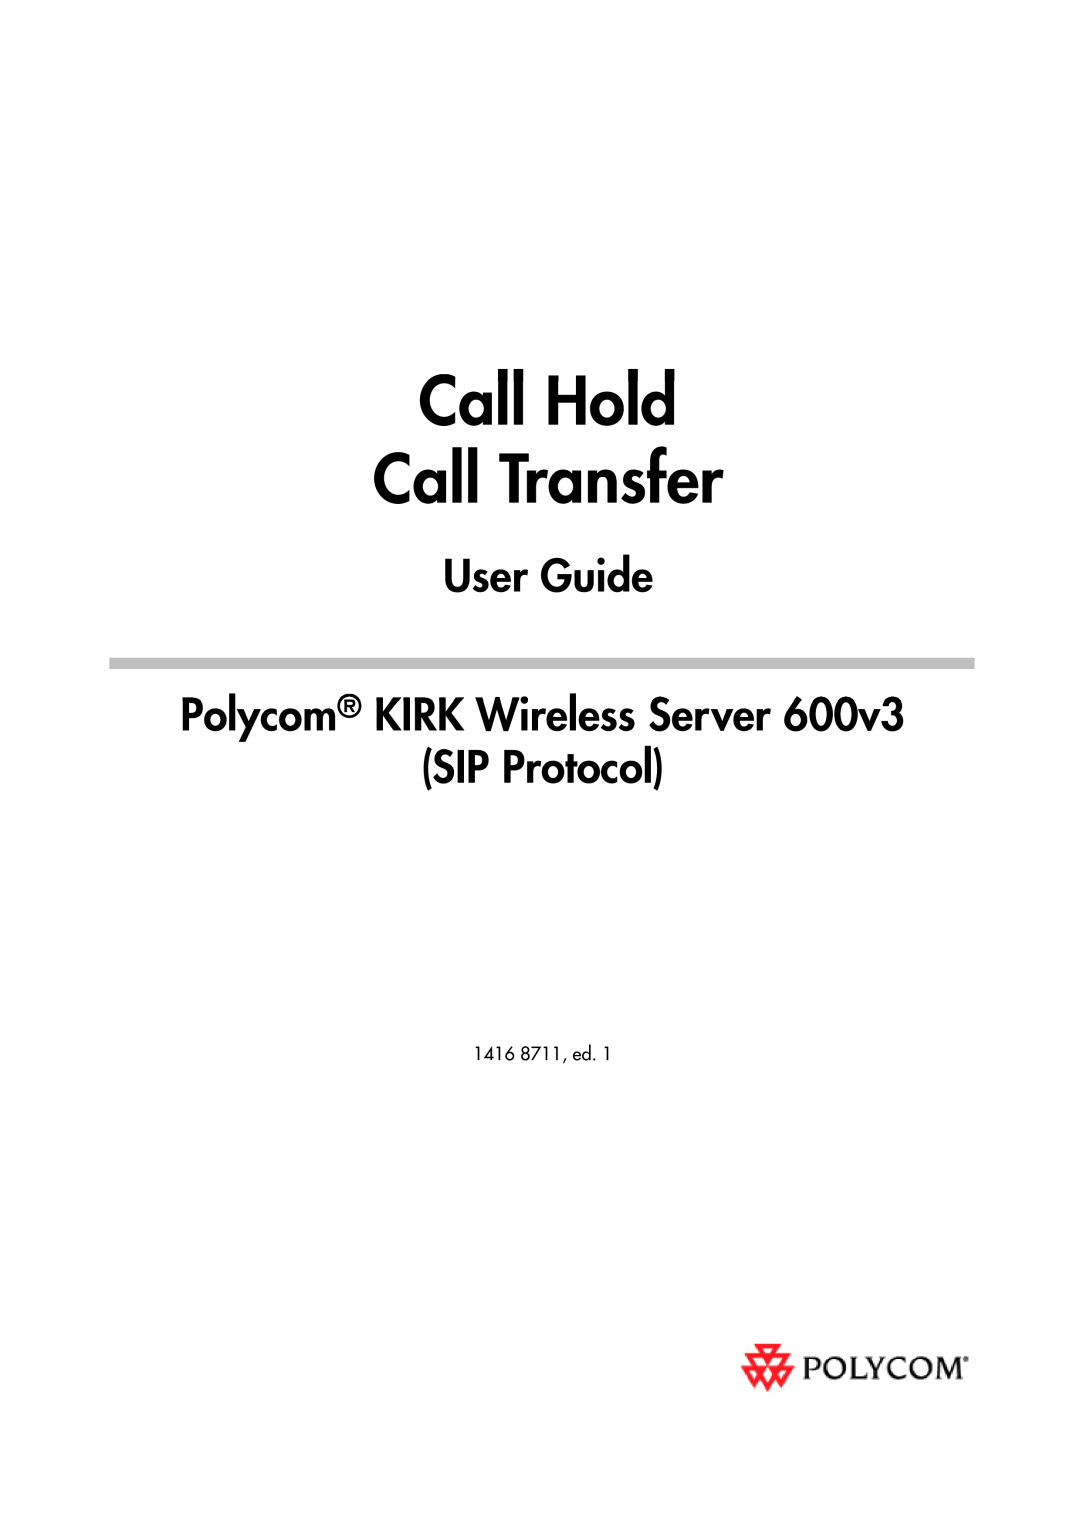 Polycom manual Call Hold Call Transfer, User Guide Polycom KIRK Wireless Server SIP Protocol, 1416 8711, ed 